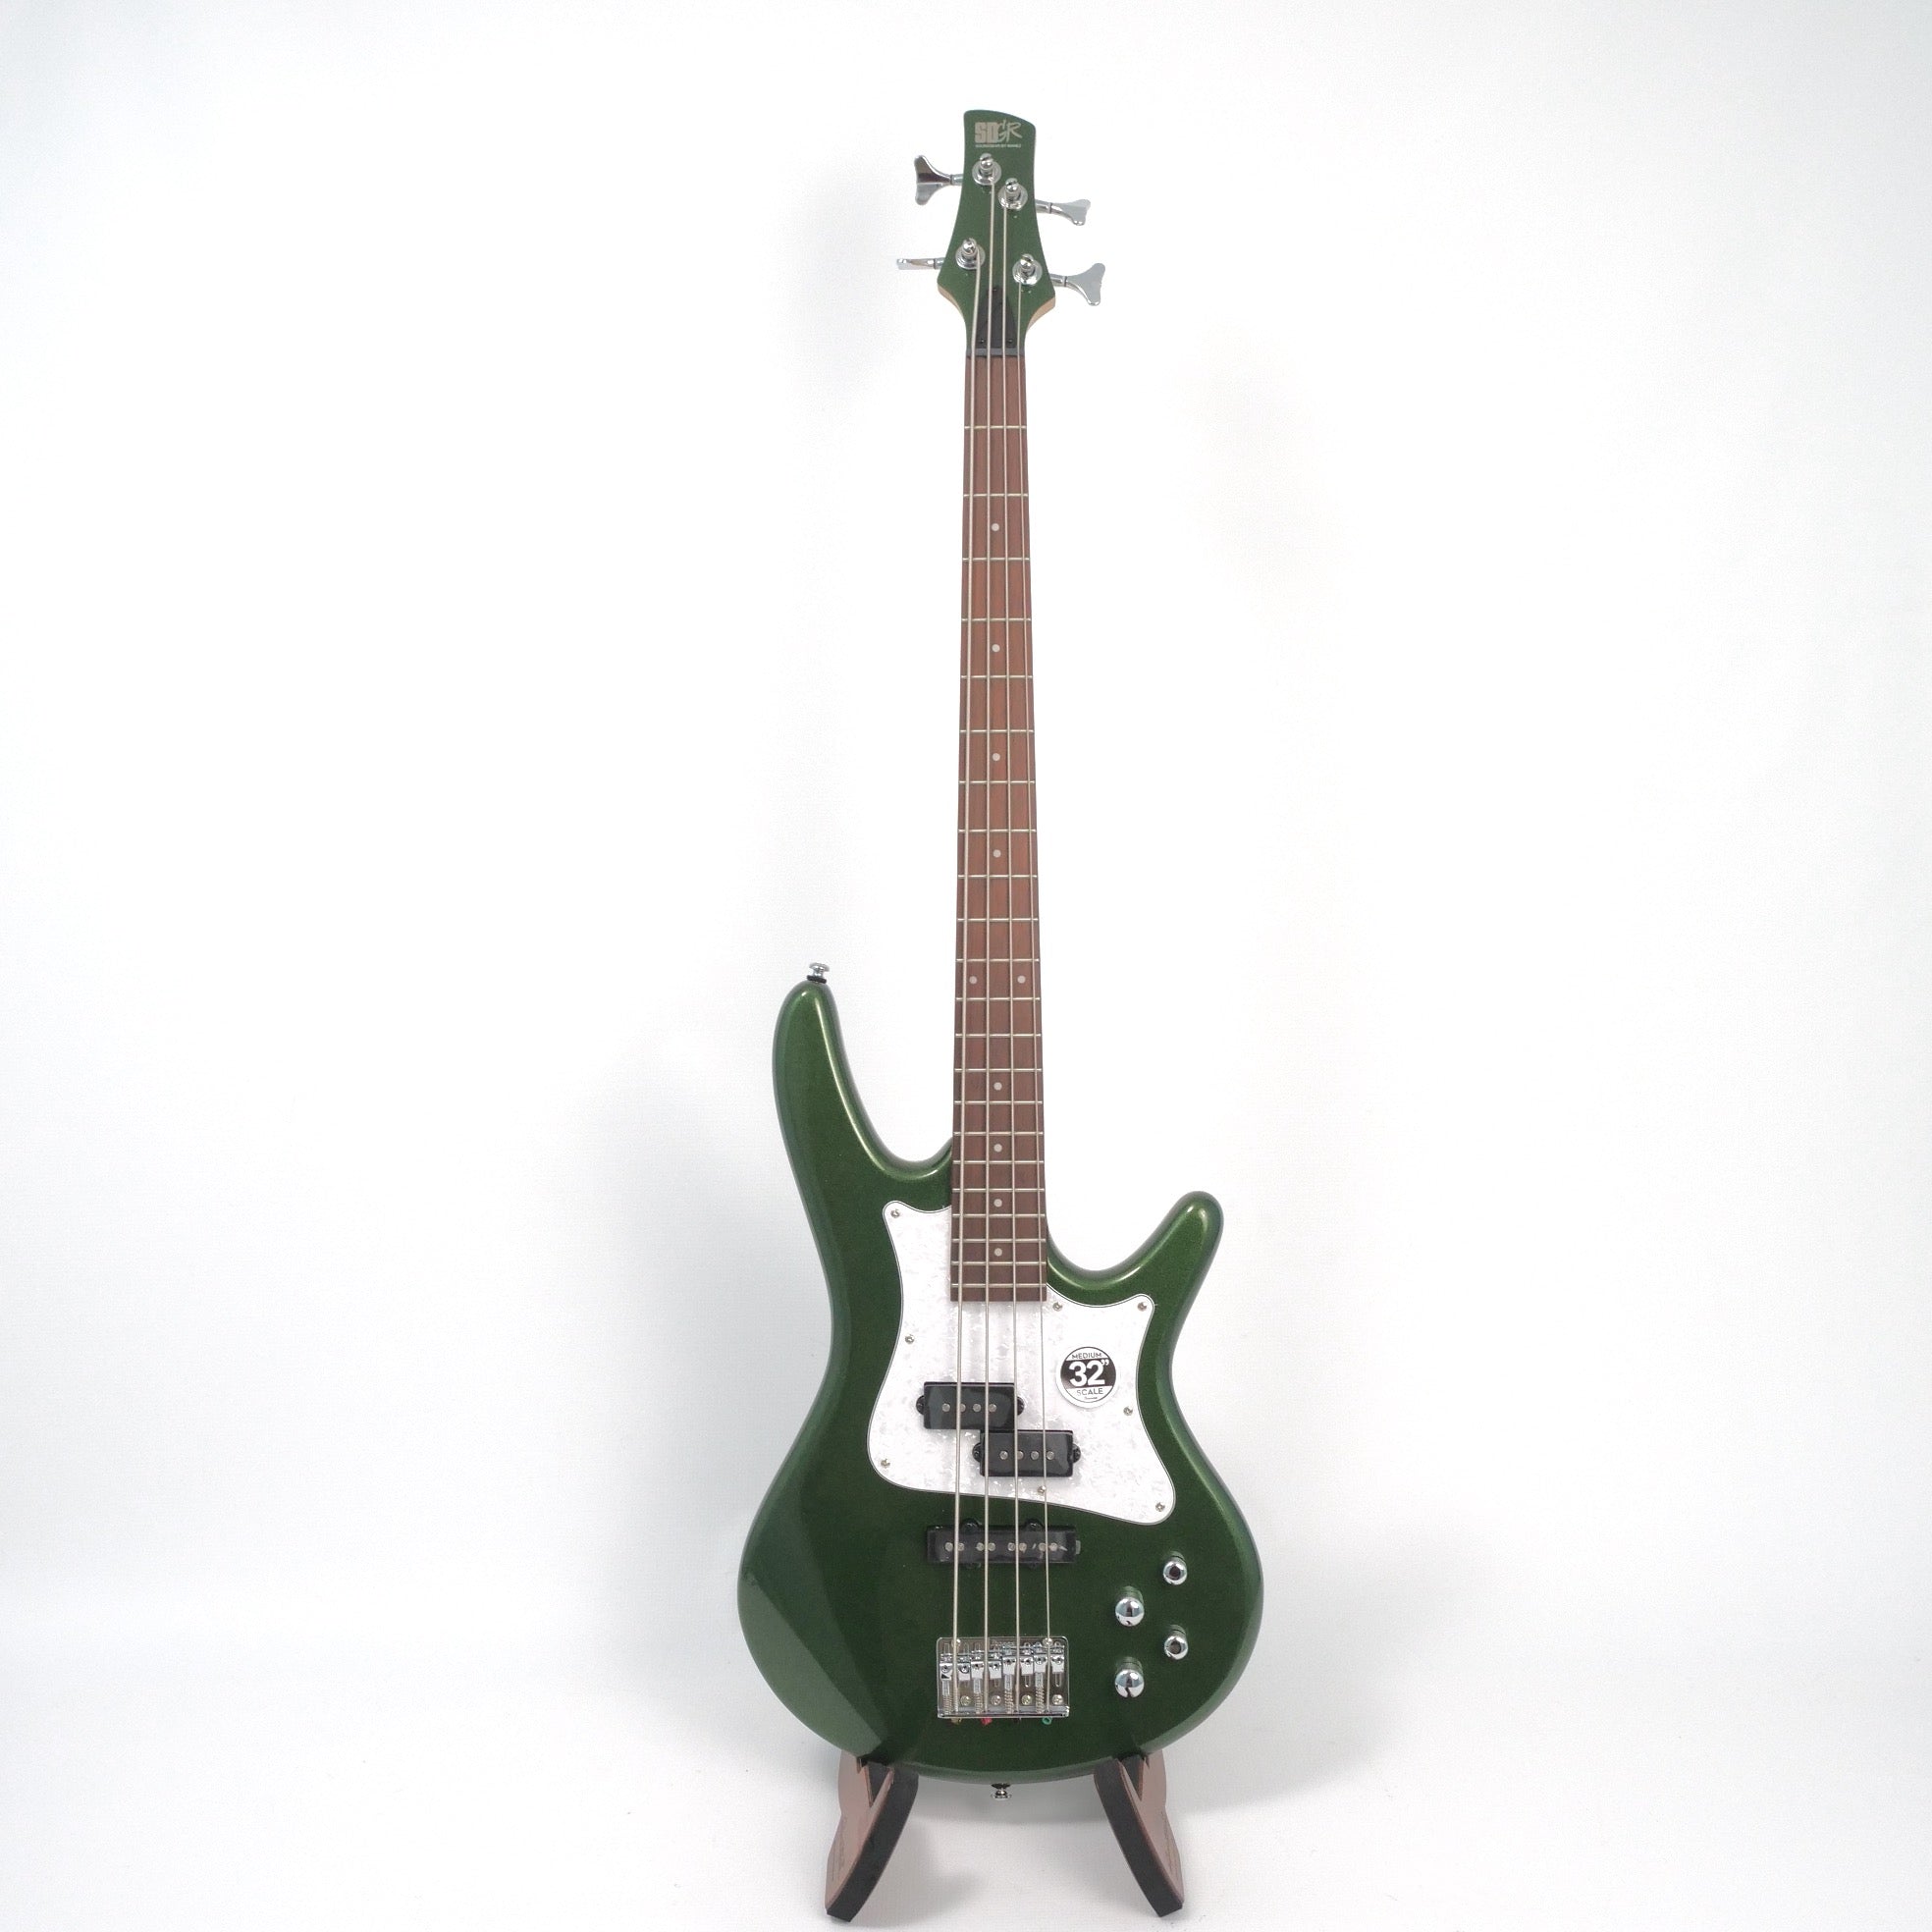 Ibanez SRMD200DMFT 4-String Bass Guitar - Metallic Forest Green Front